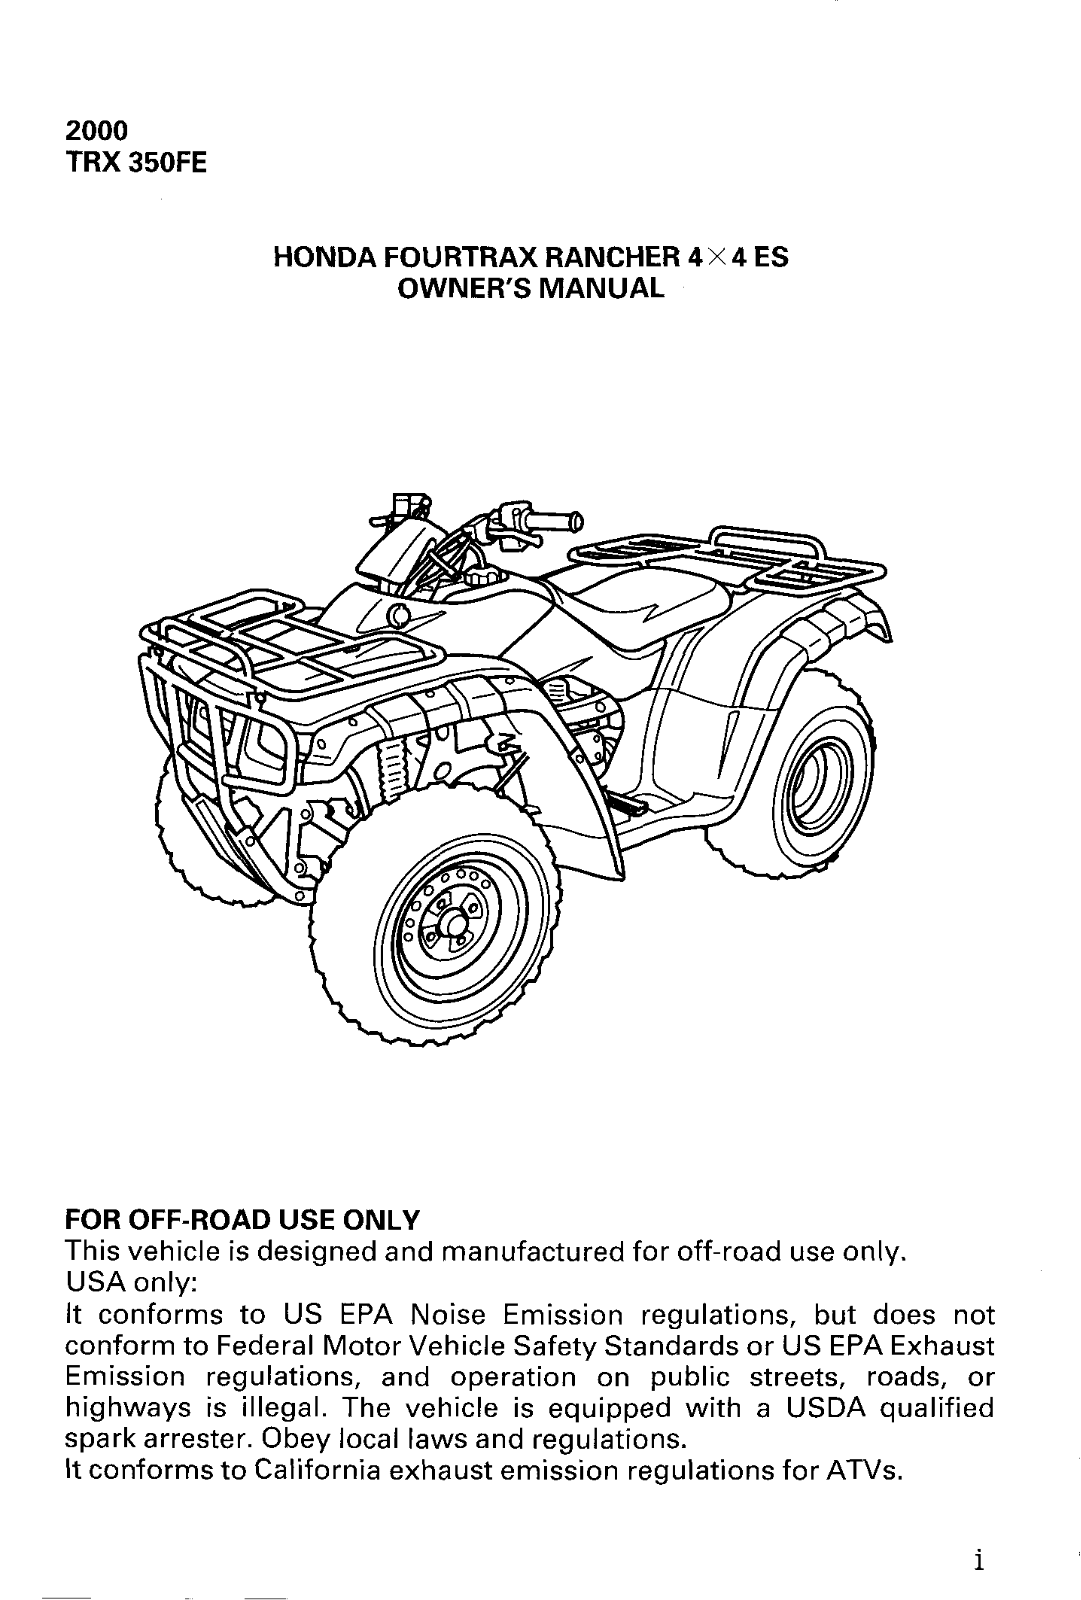 Honda TRX350FE FOURTRAX 2000 Owner's Manual